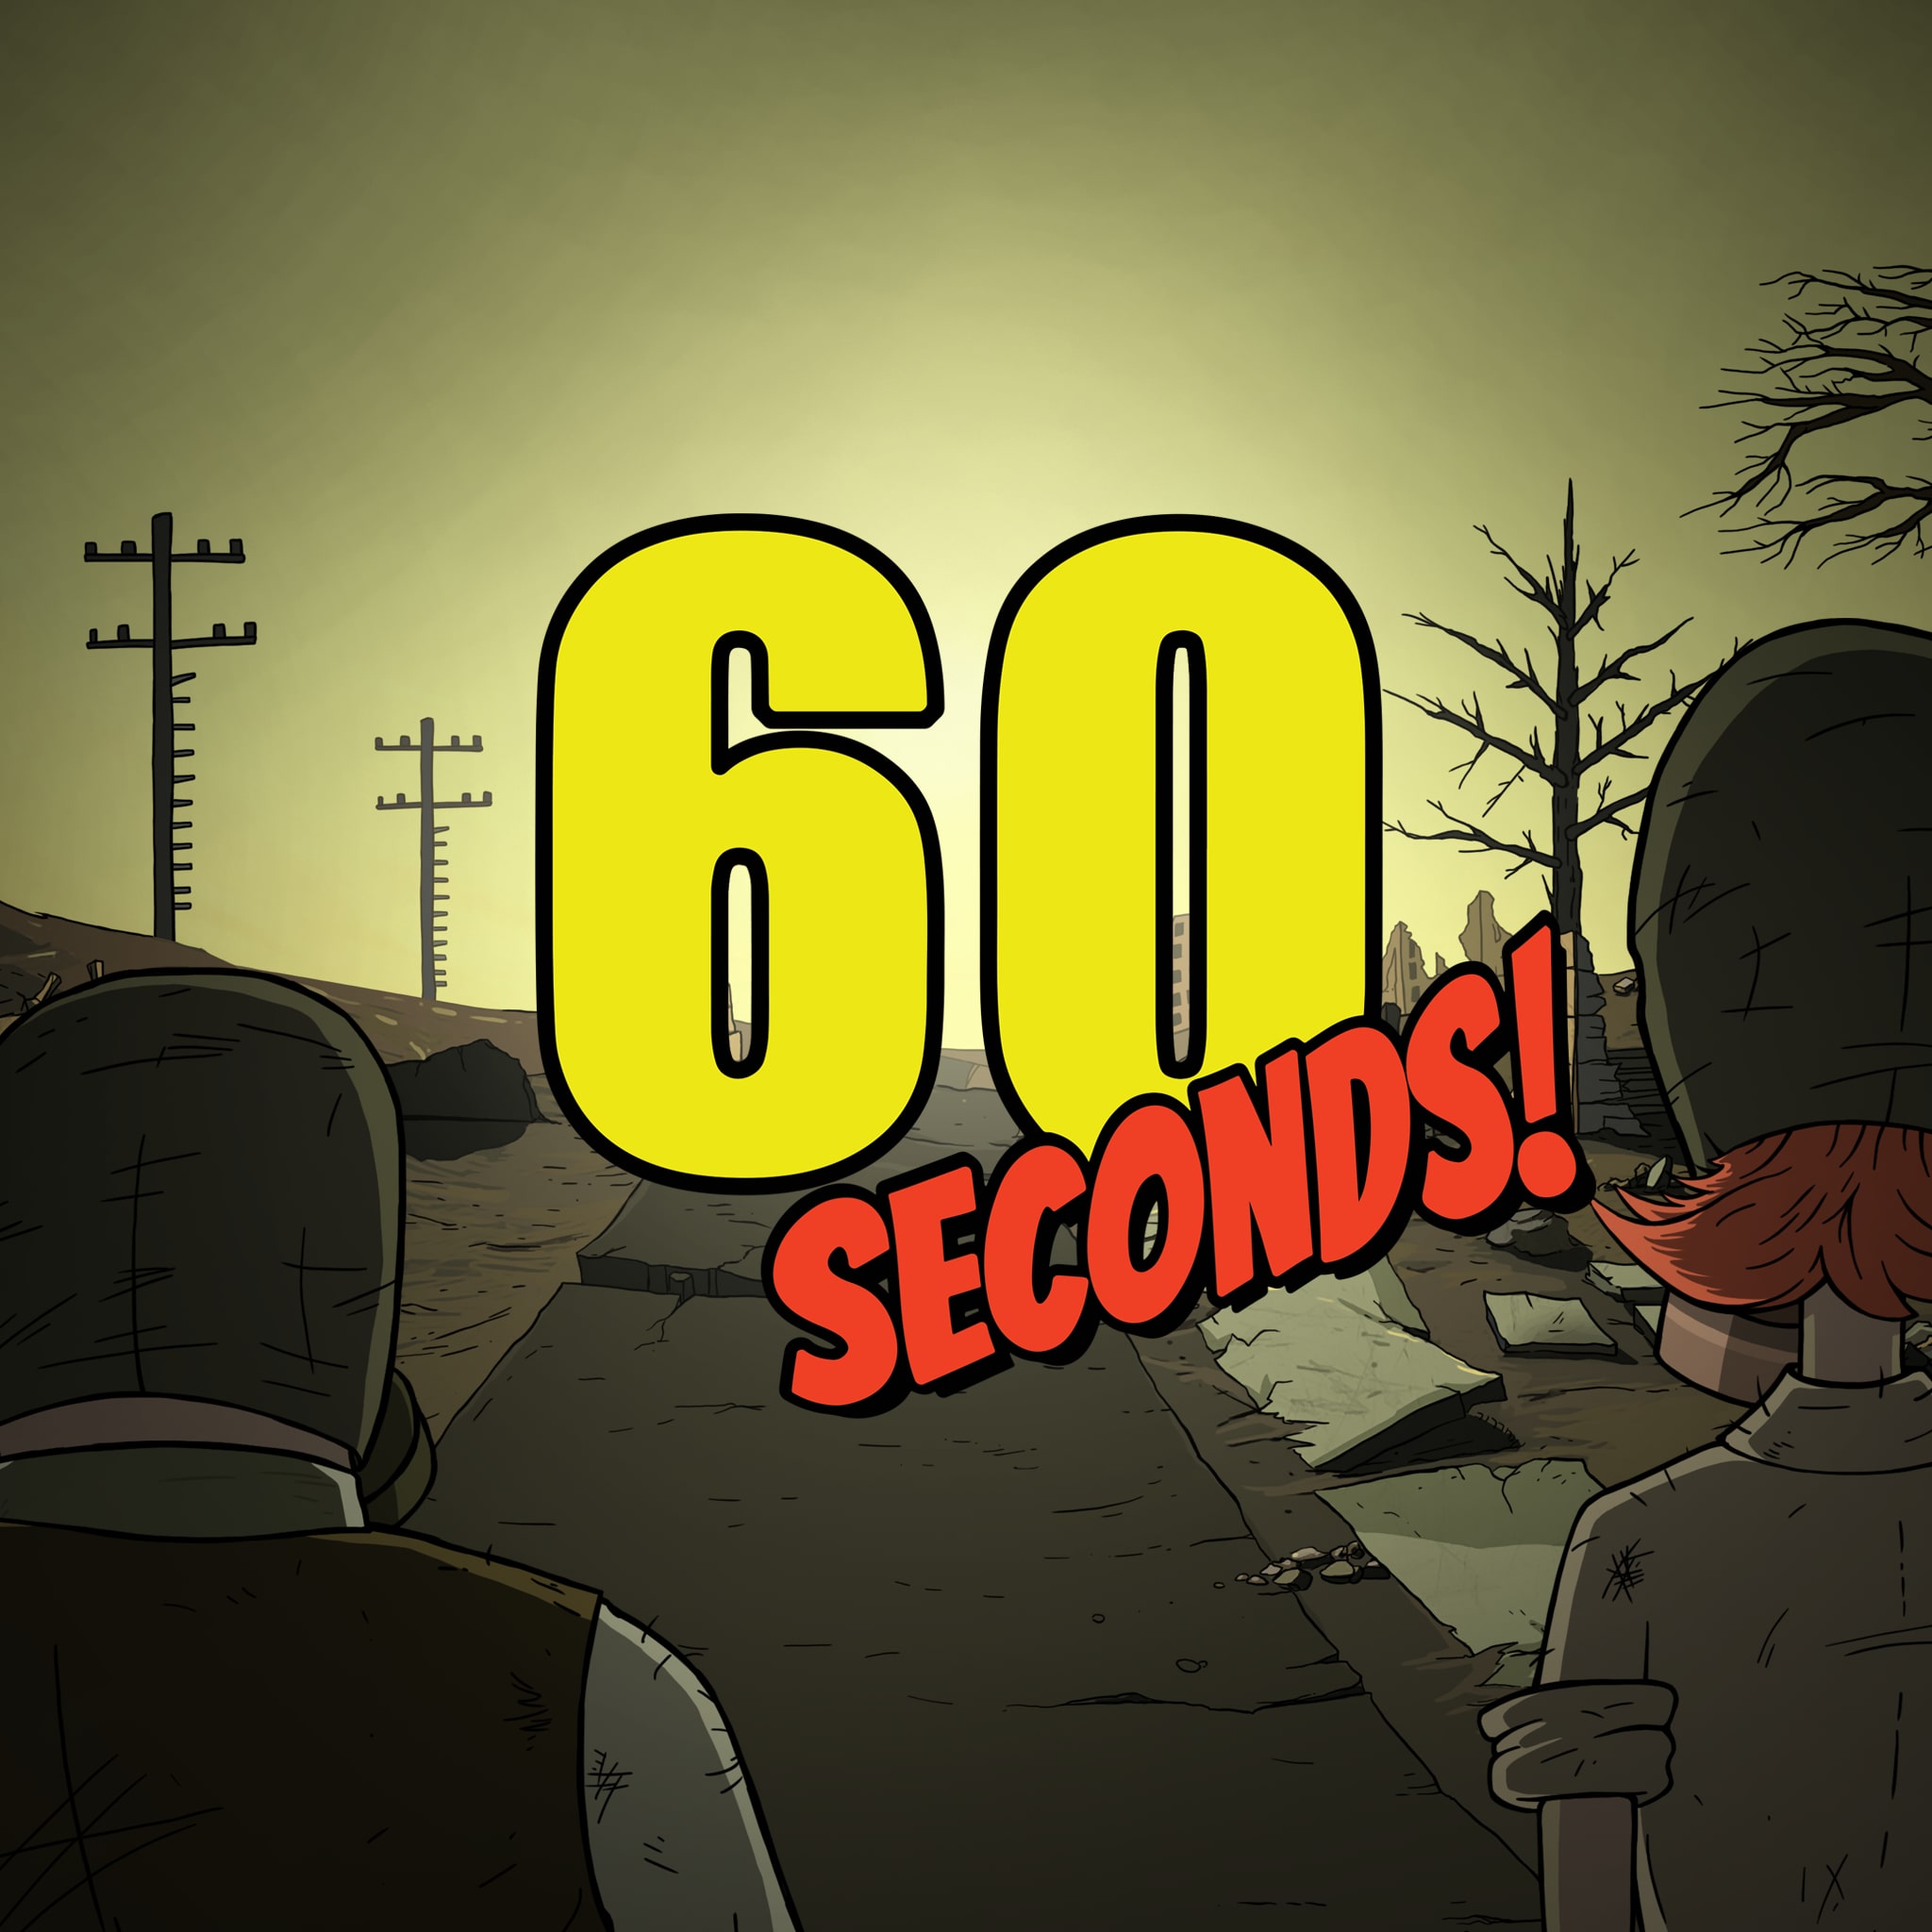 ps4 60 seconds